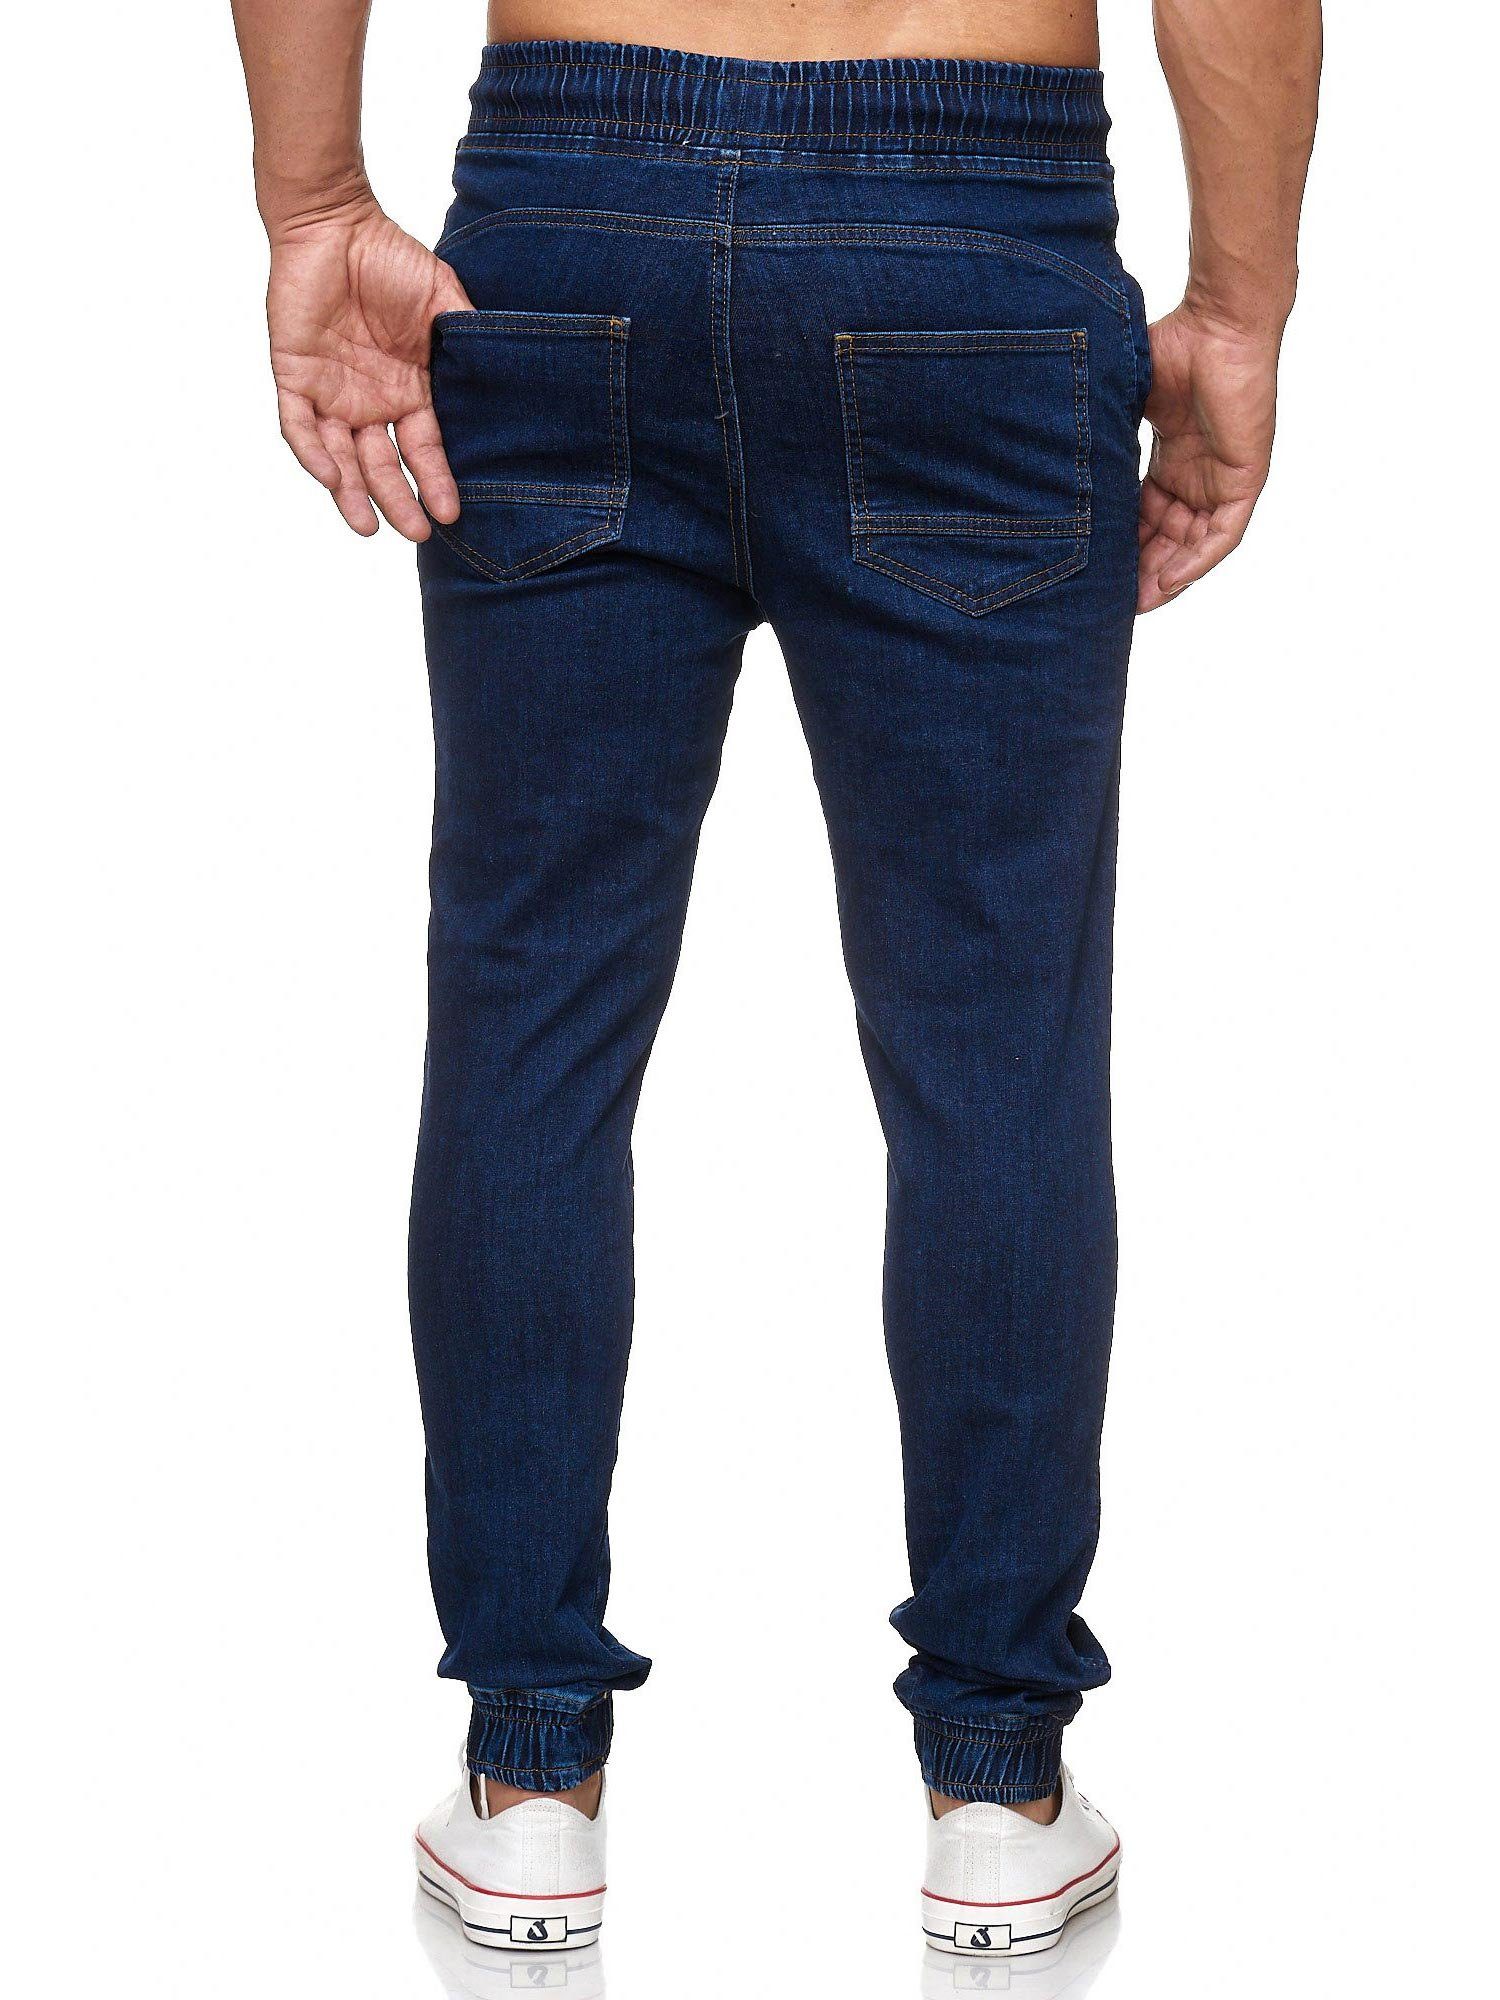 Tazzio Straight-Jeans 17504 Sweat Hose im dunkelblau Jogger-Stil